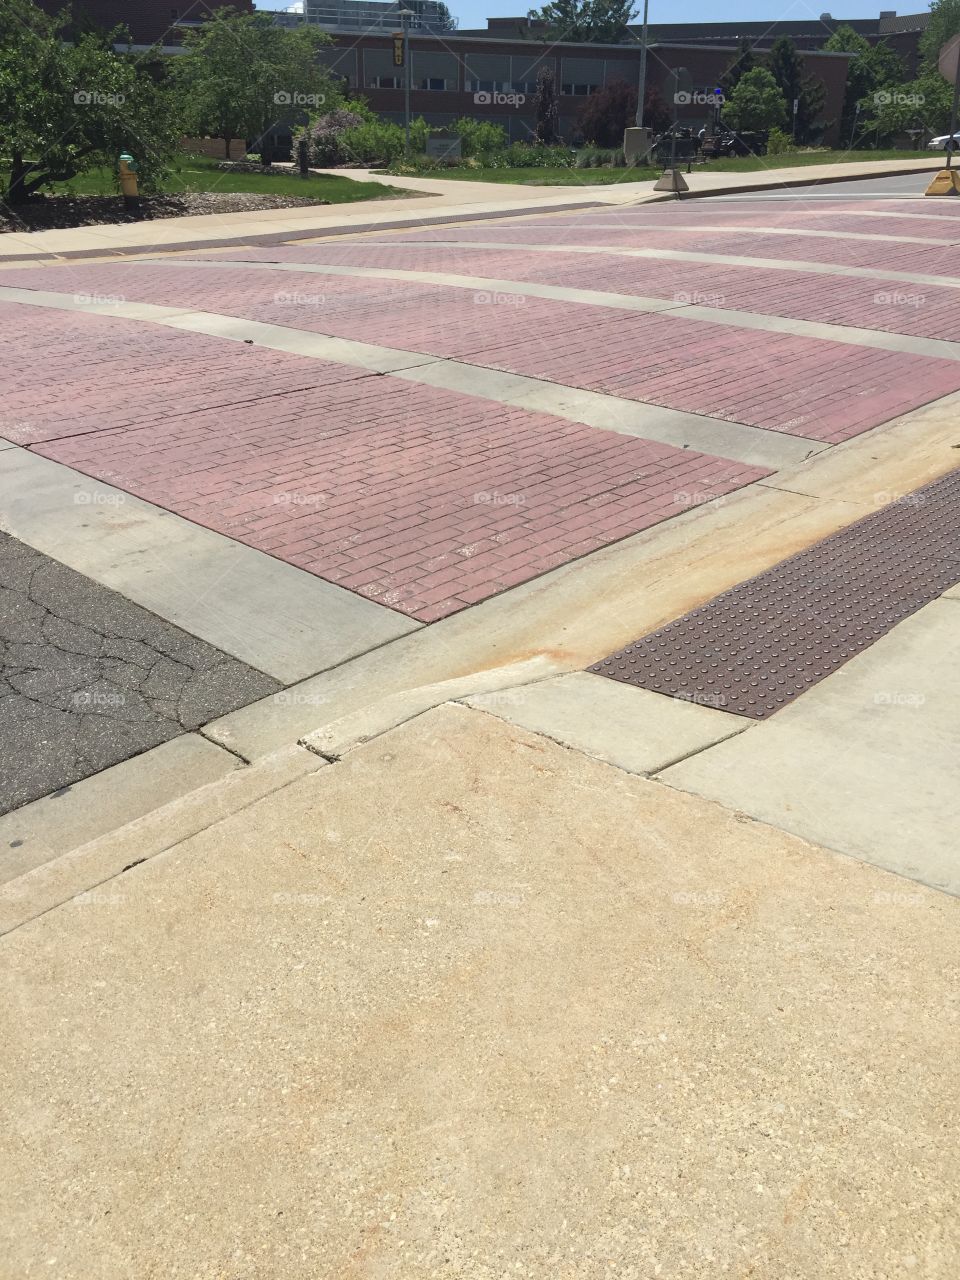 University crosswalk